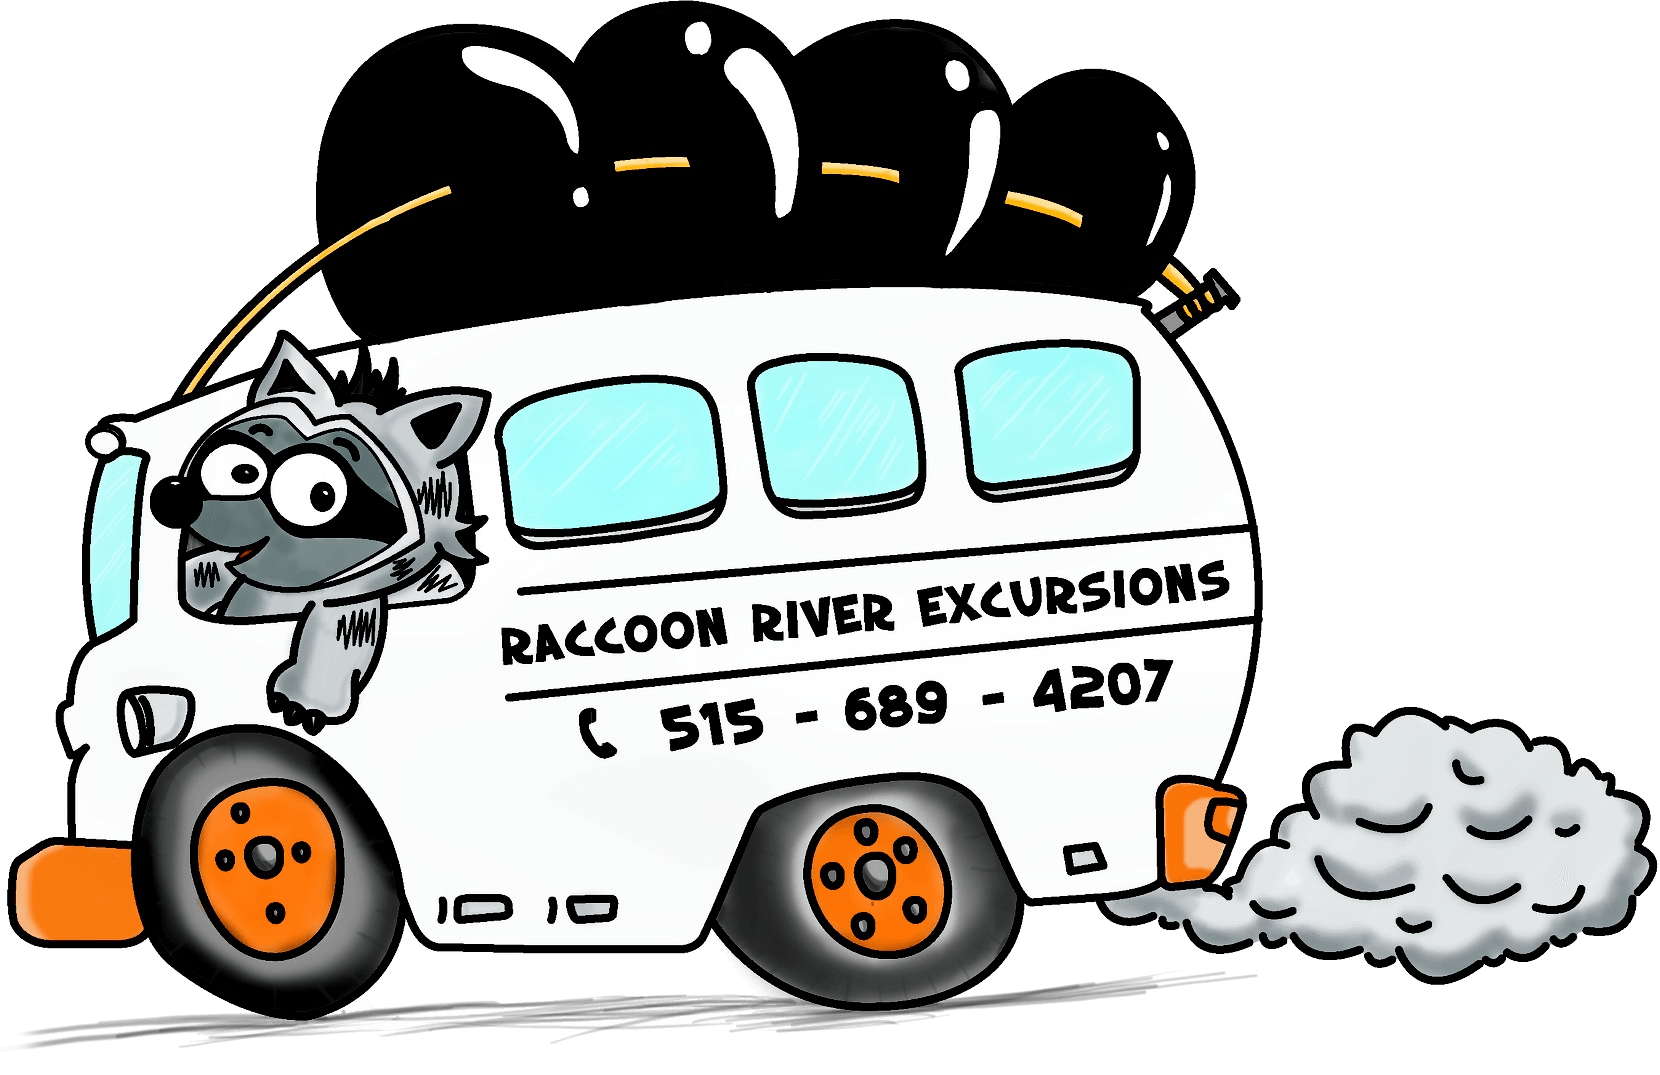 Raccoon River Excursions logo